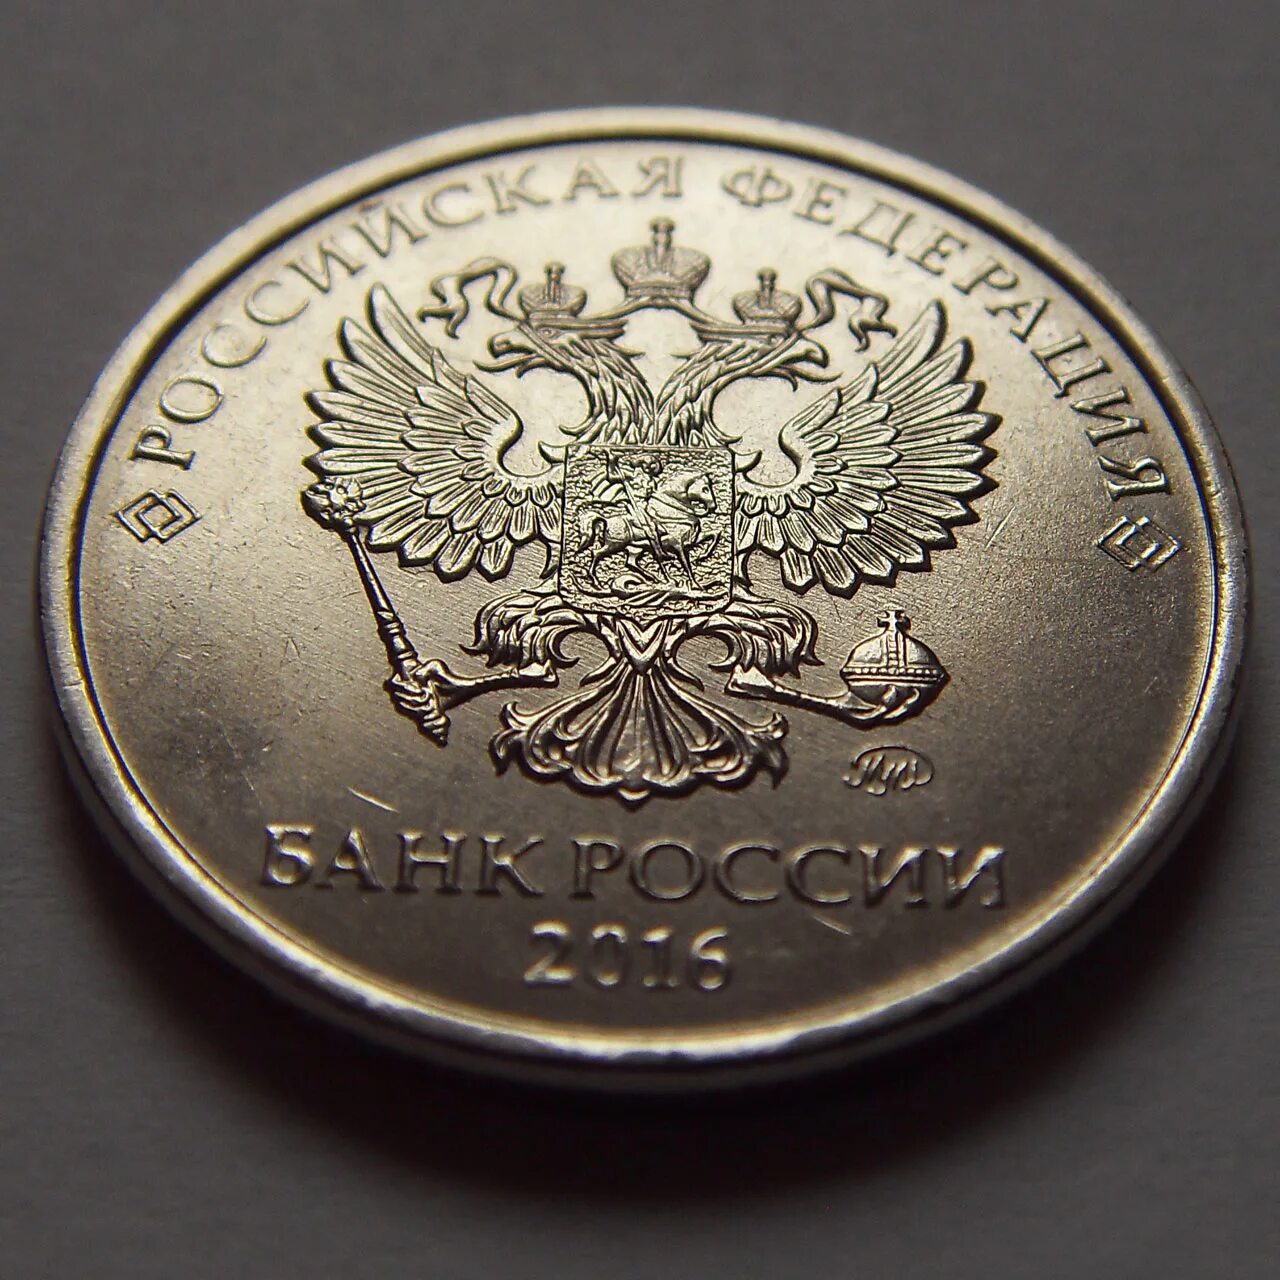 2 Рубля 2016 СПМД. Монета 2 рубля 2016 года СПМД. 1 Рубль 2016 года СПМД. Монета 1 руб 2016 года.